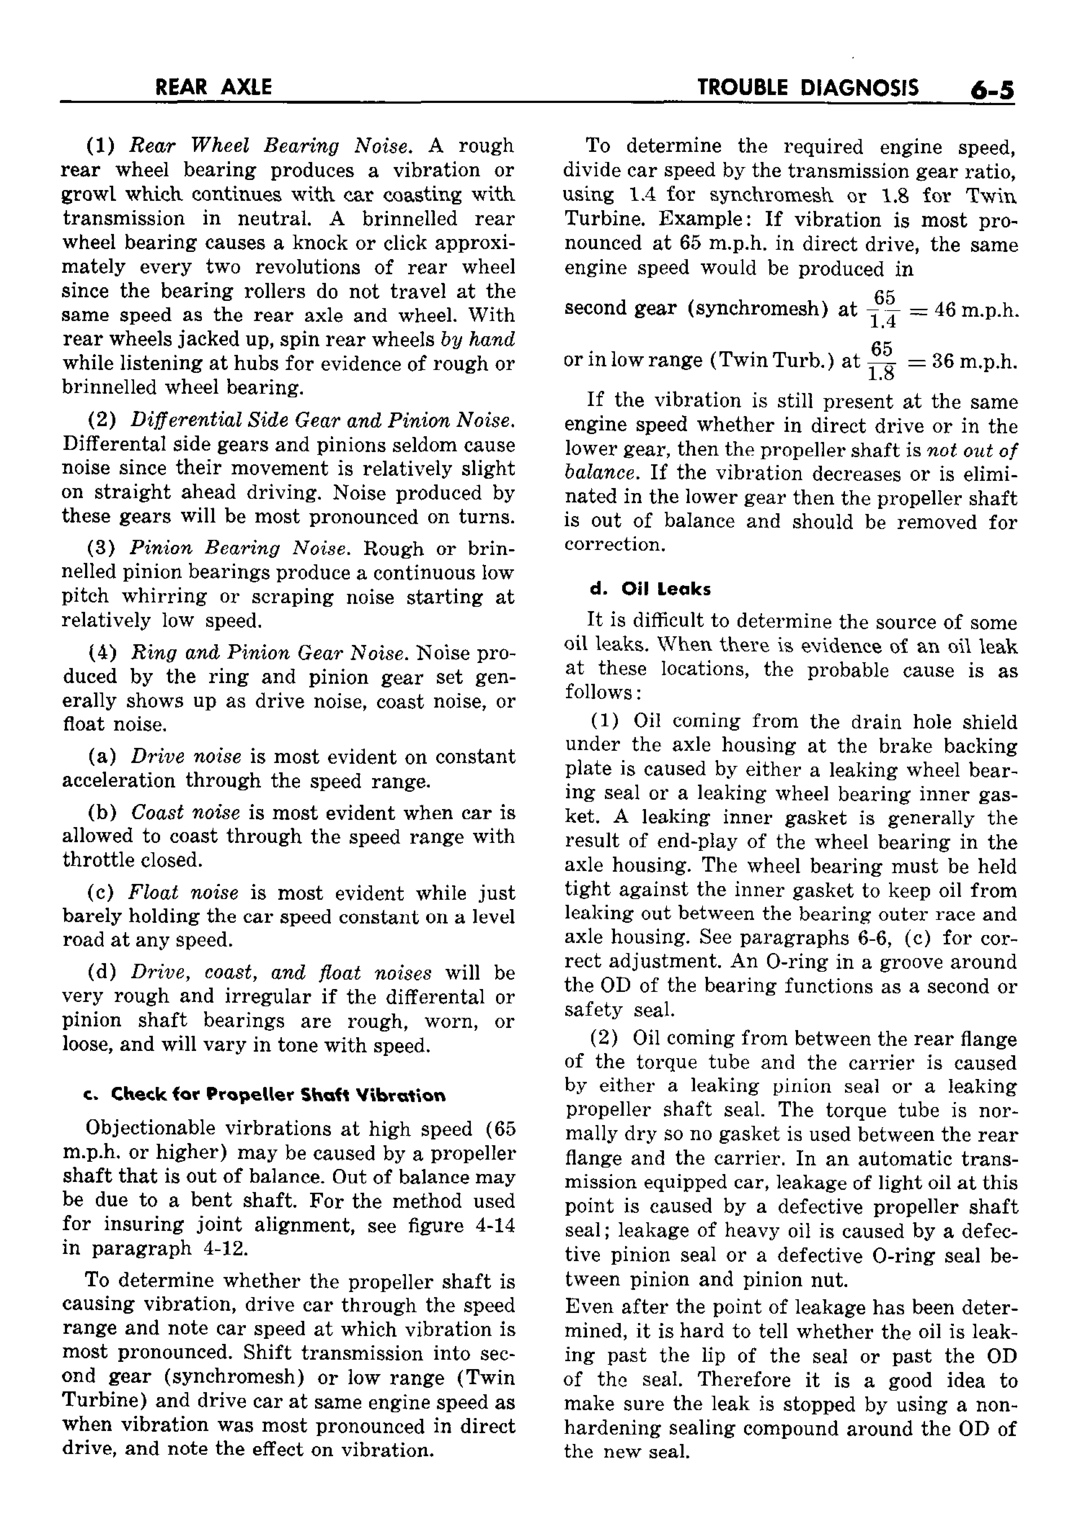 n_07 1959 Buick Shop Manual - Rear Axle-005-005.jpg